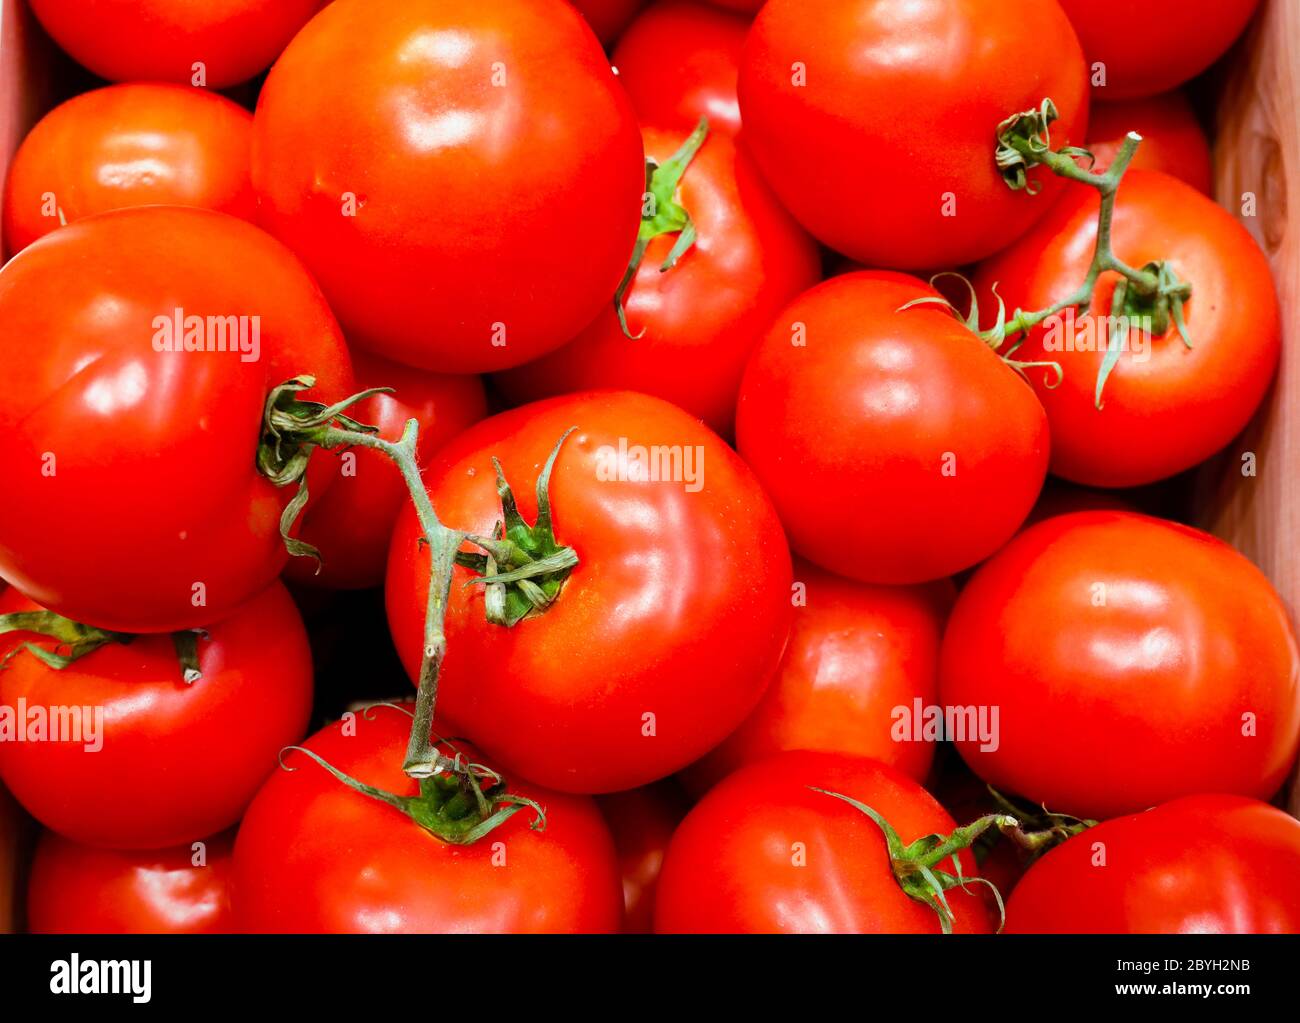 Allemagne - les tomates sont dans une boîte en bois. Deutschland - Tomaten liegen in einer Holzkiste. Banque D'Images